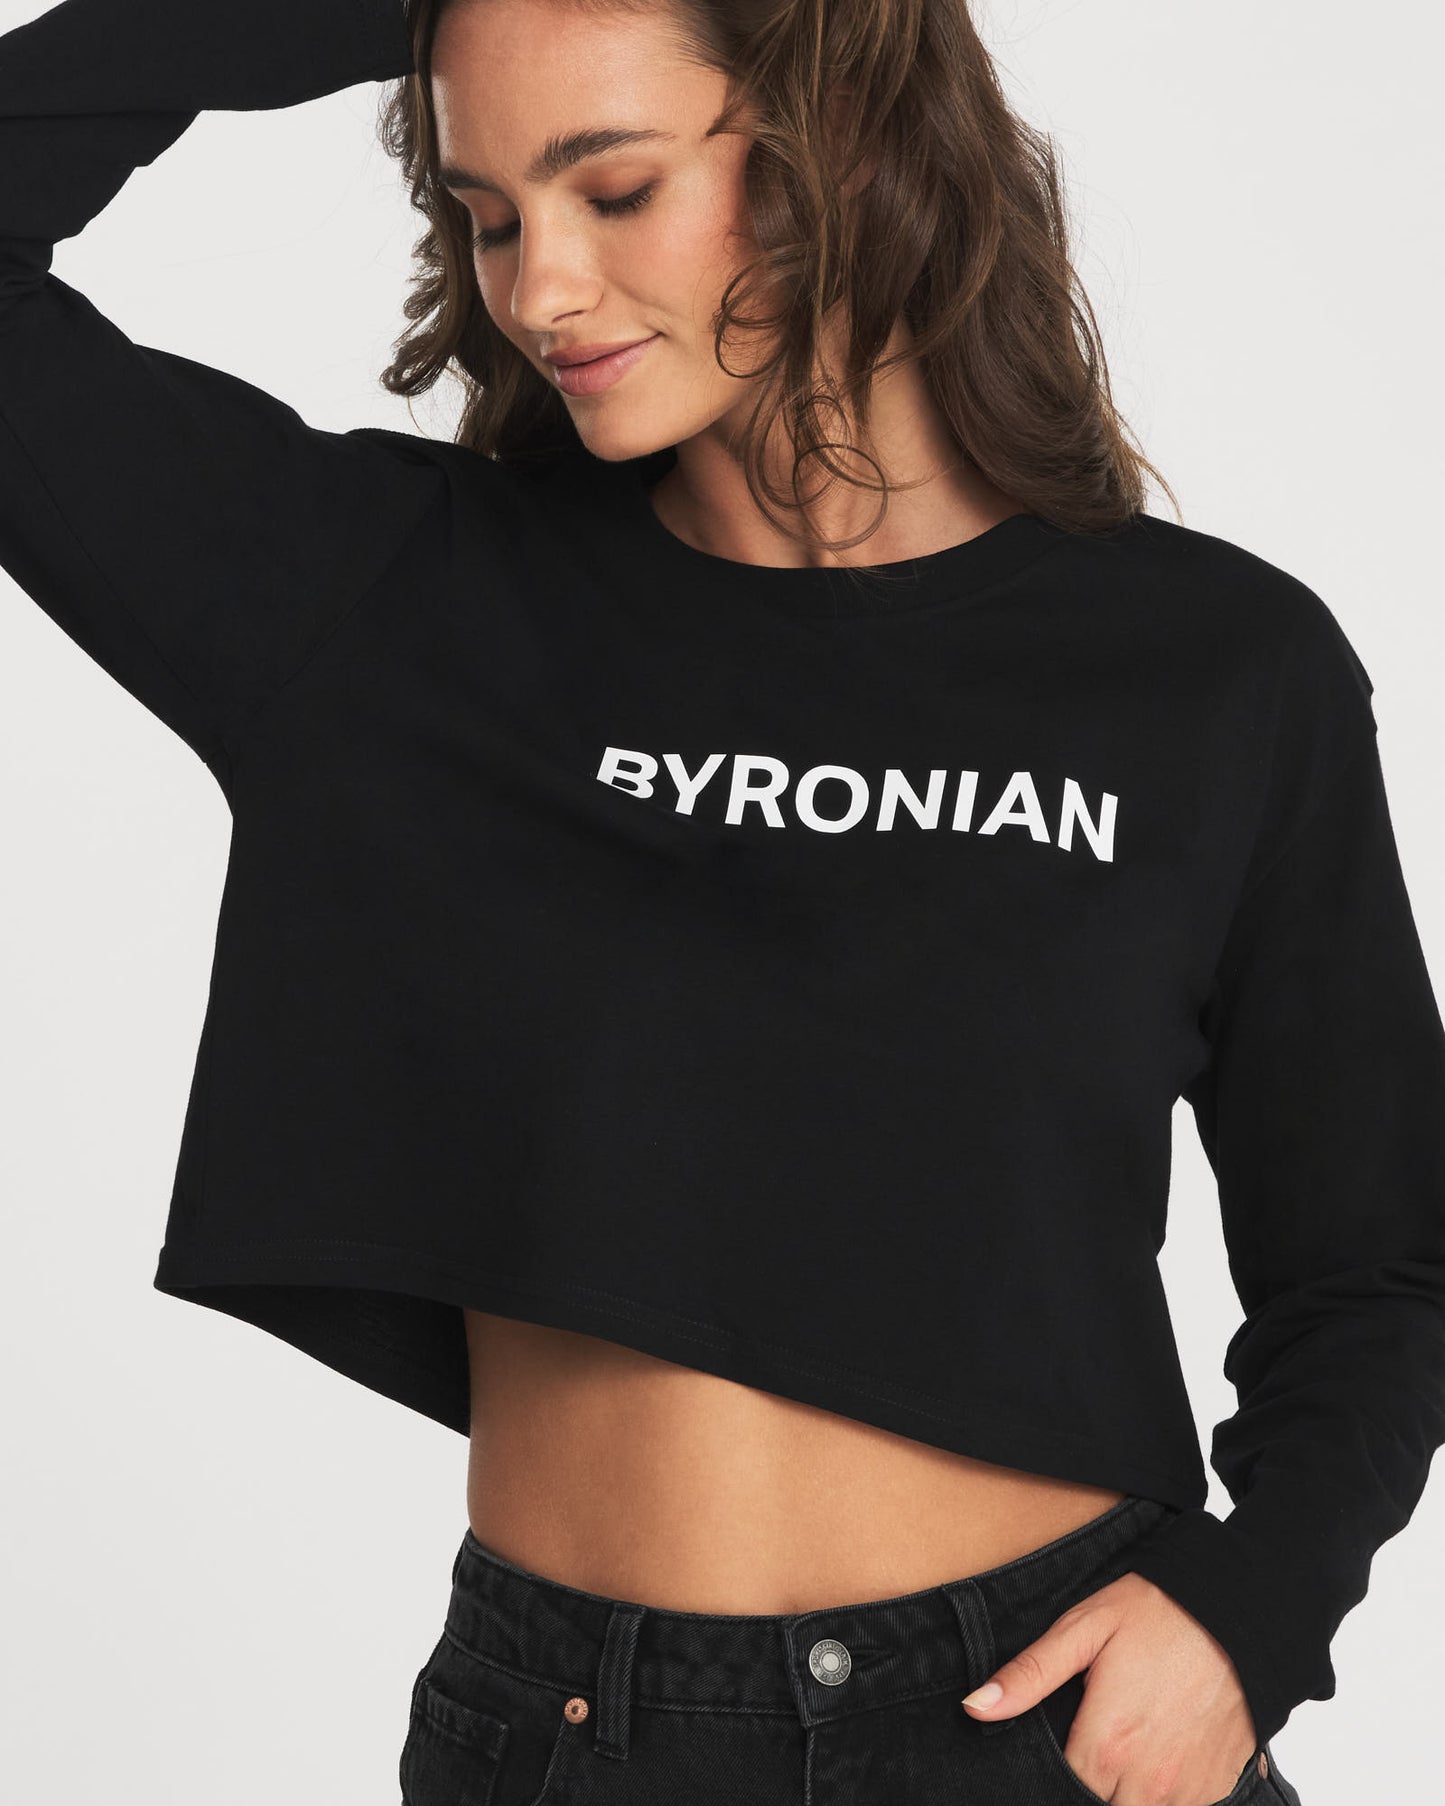 Byronian T-Shirt